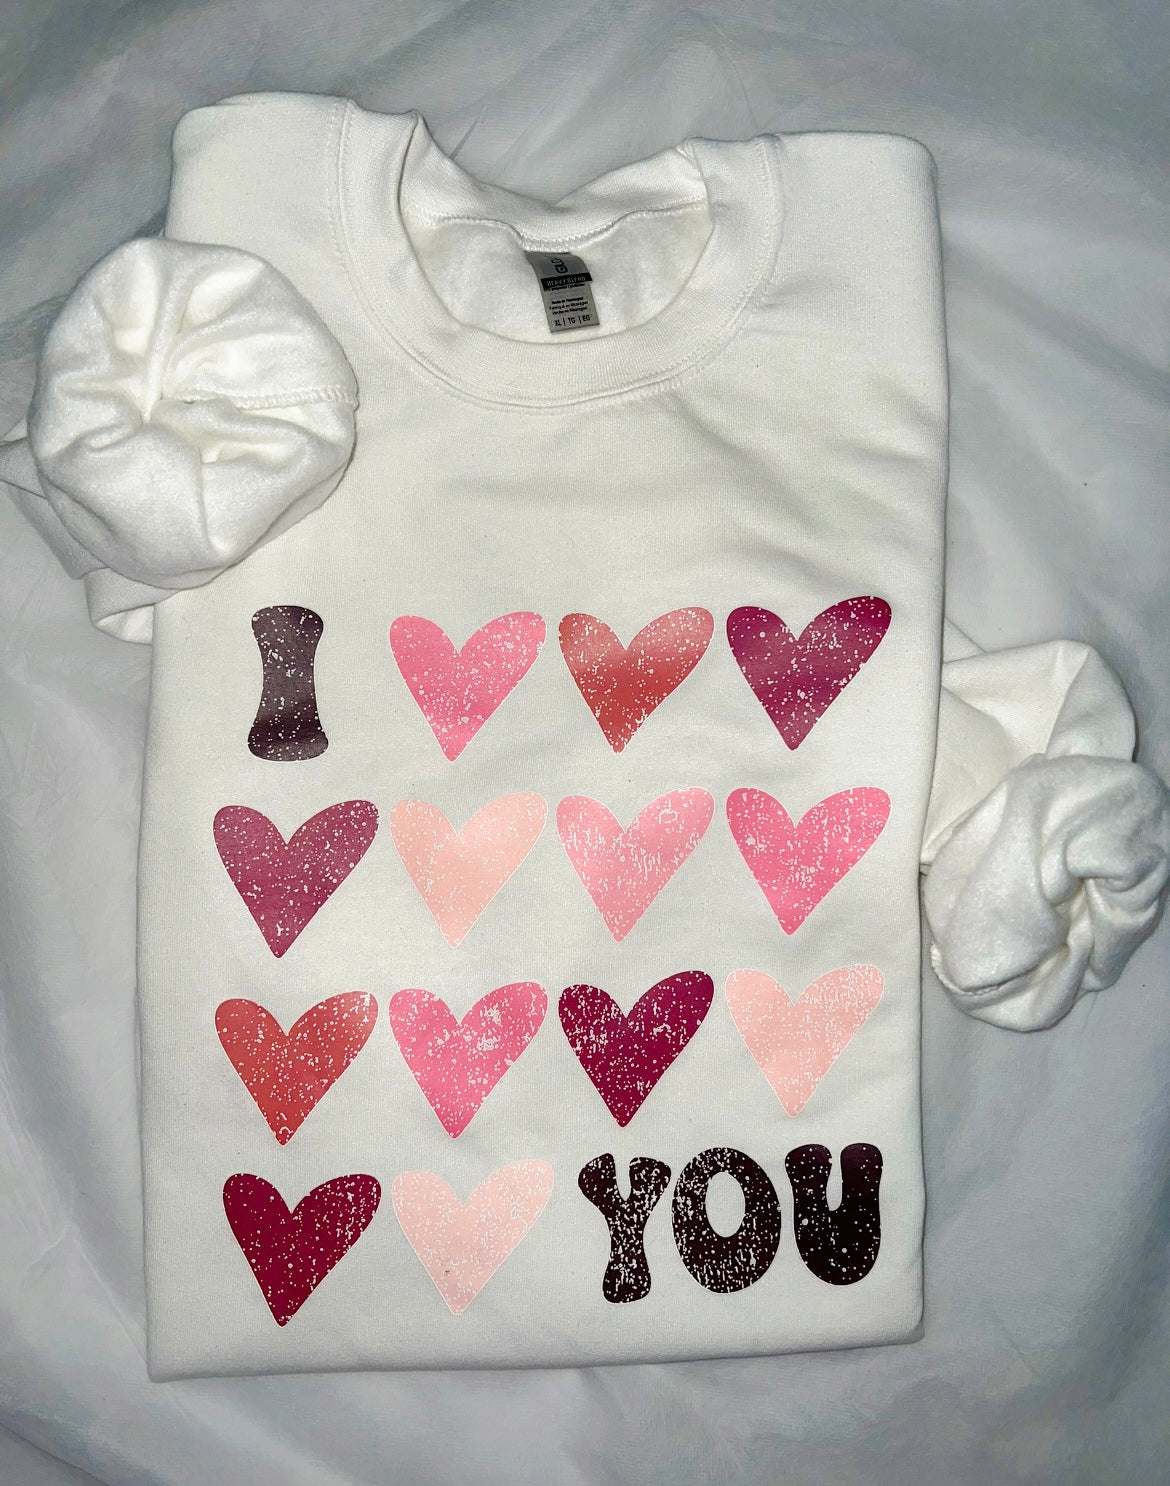 I ♥️ U Valentine Crewneck in White, Cute and Cozy Valentine Sweater